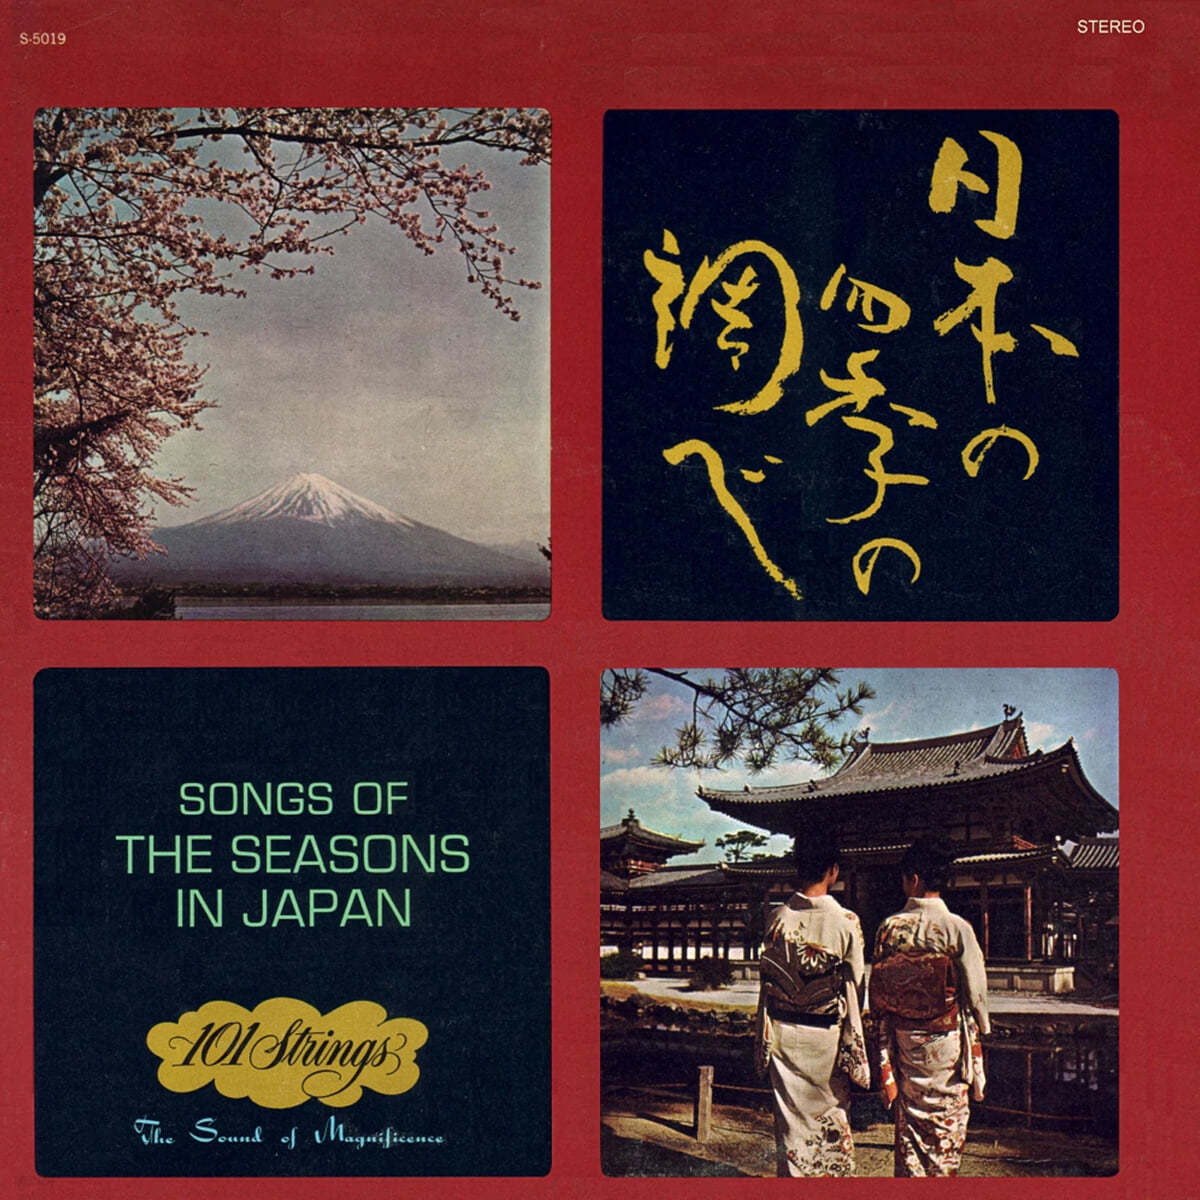 101 Strings Orchestra - Songs Of The Seasons In Japan